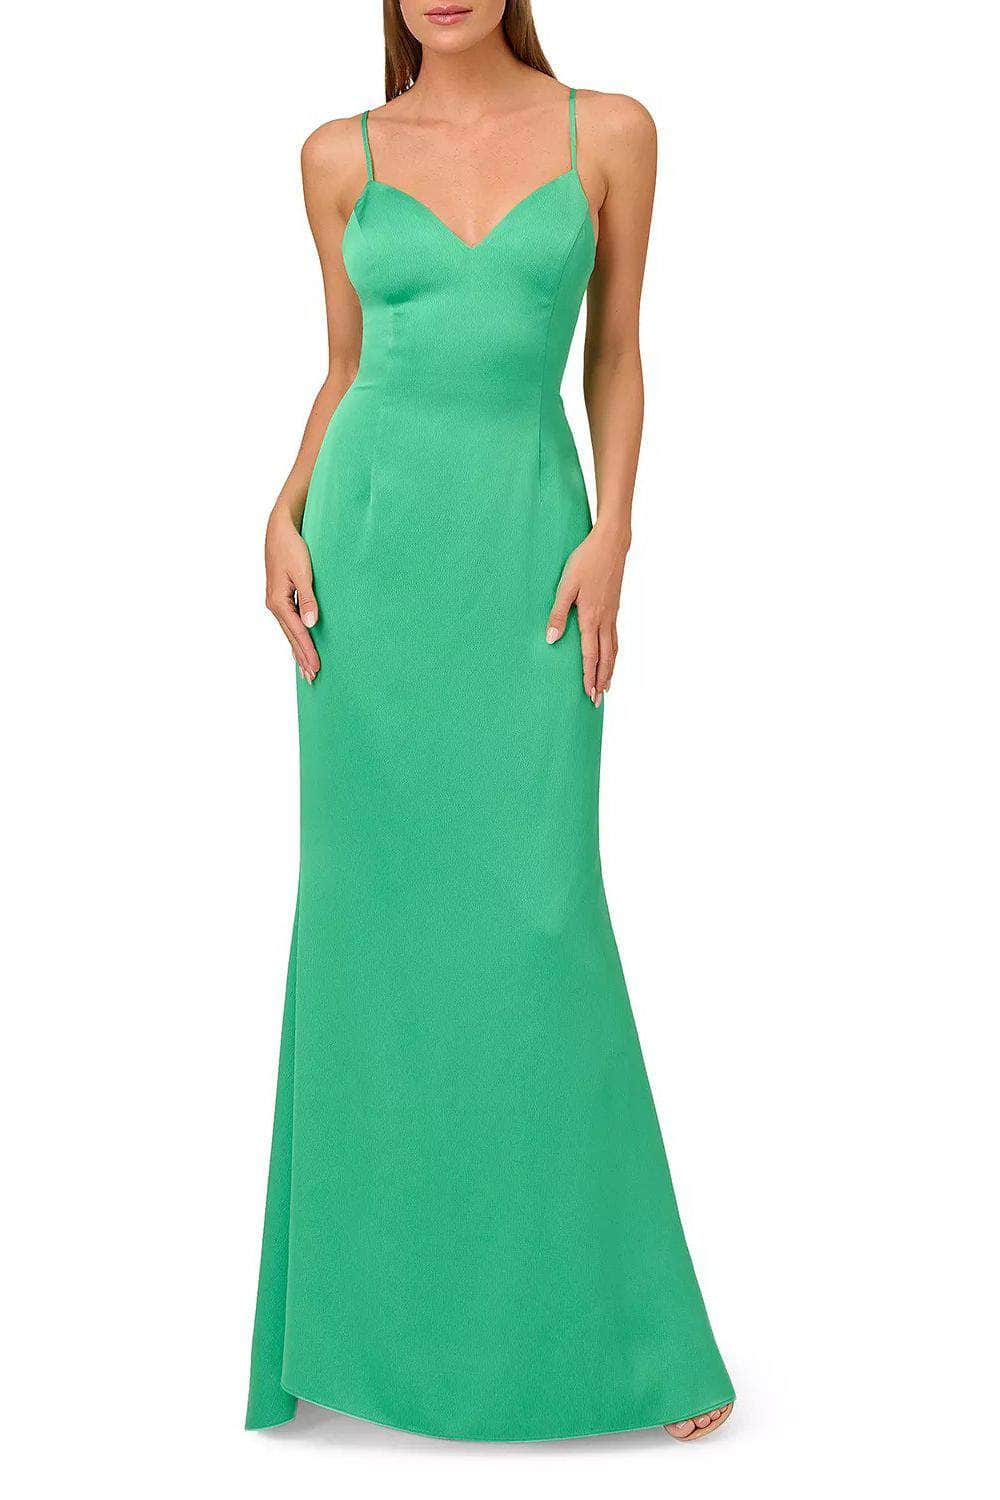 Liv Foster ML1E208205 - V-Neck Adjustable Strap Evening Dress
